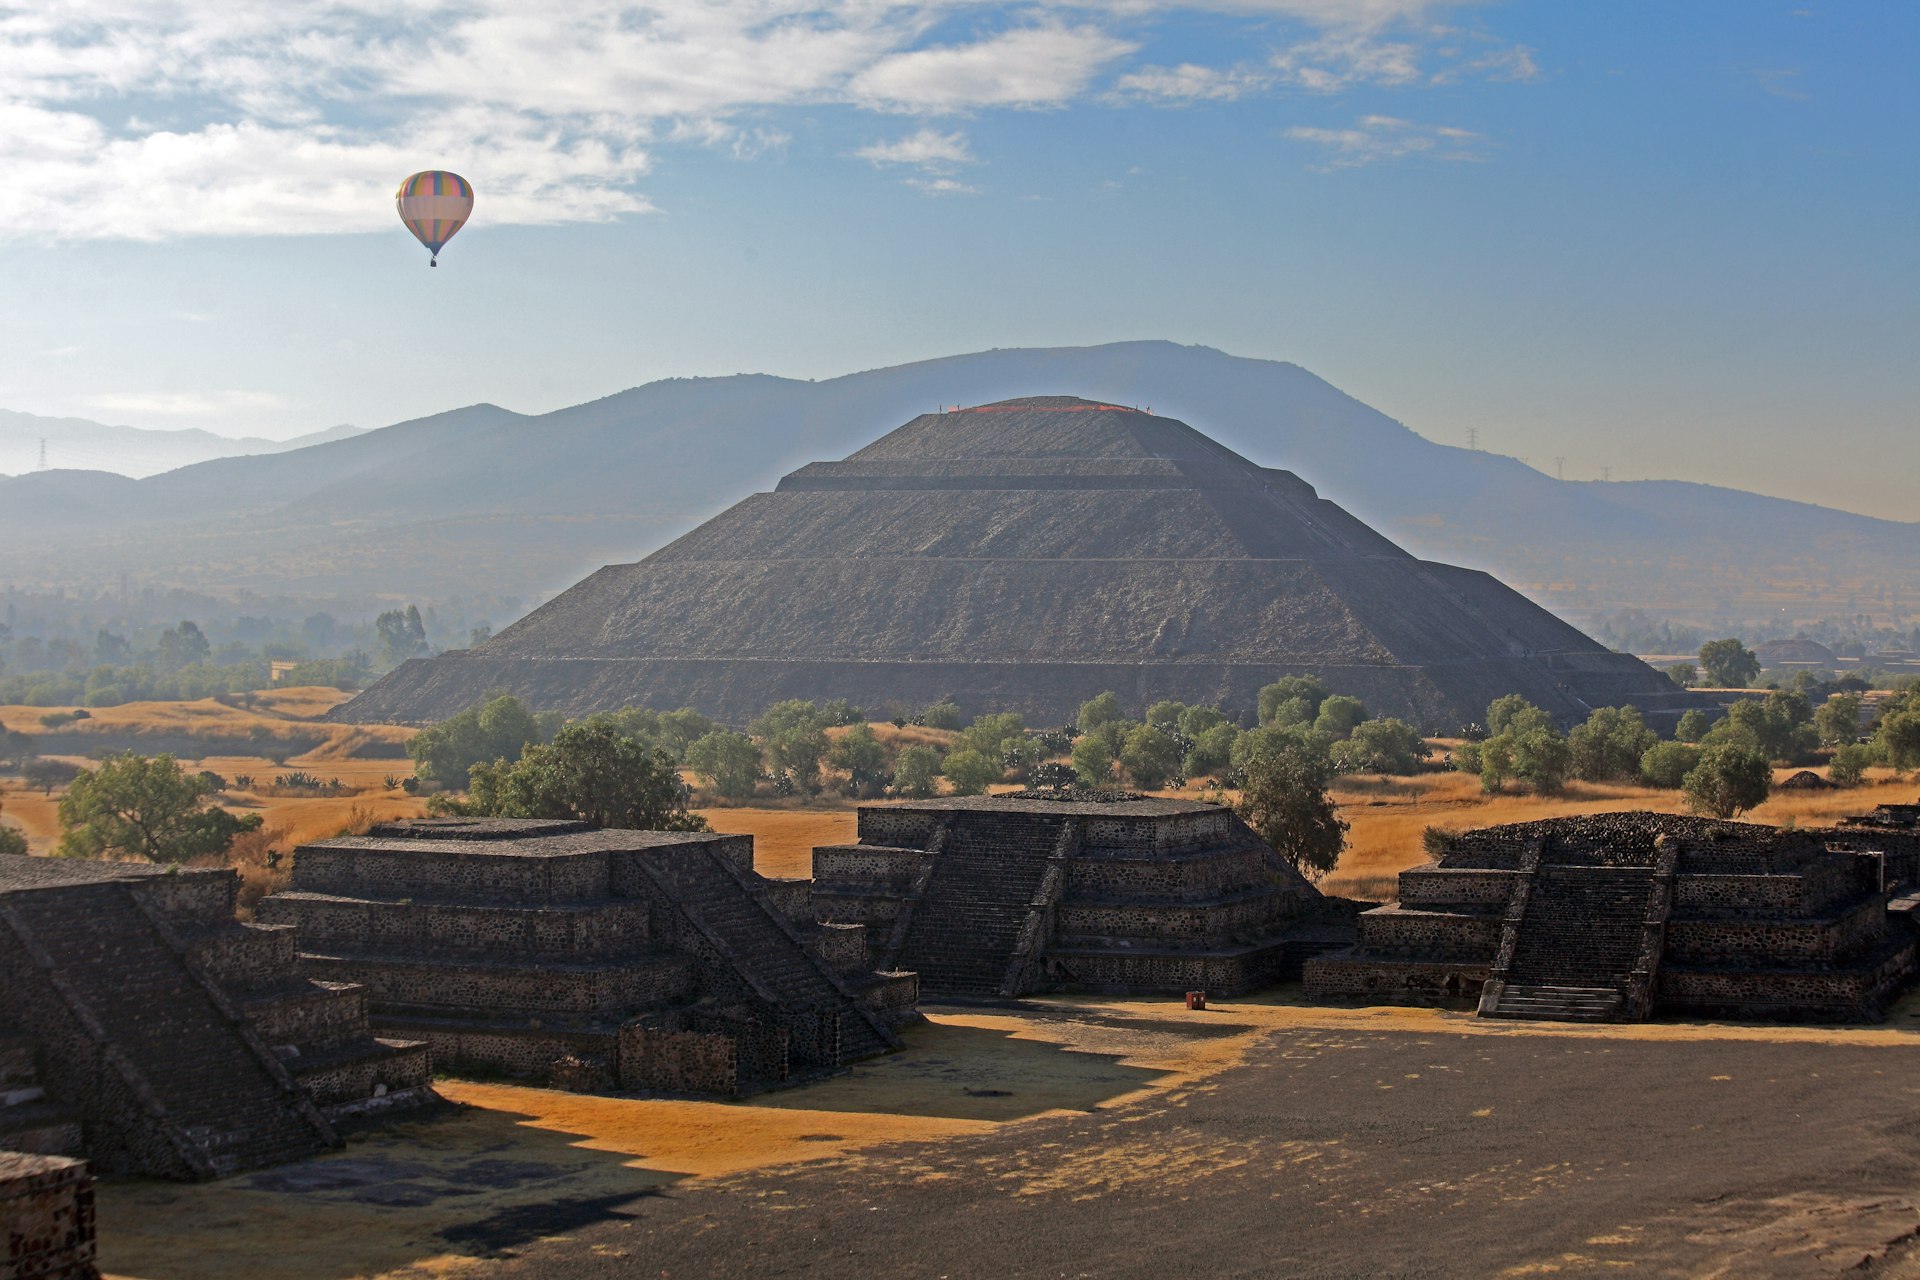 A hot-air balloon floats near the Pyramid of the Sun, as seen from the Pyramid of the Moon in Teotihuacán, Mexico